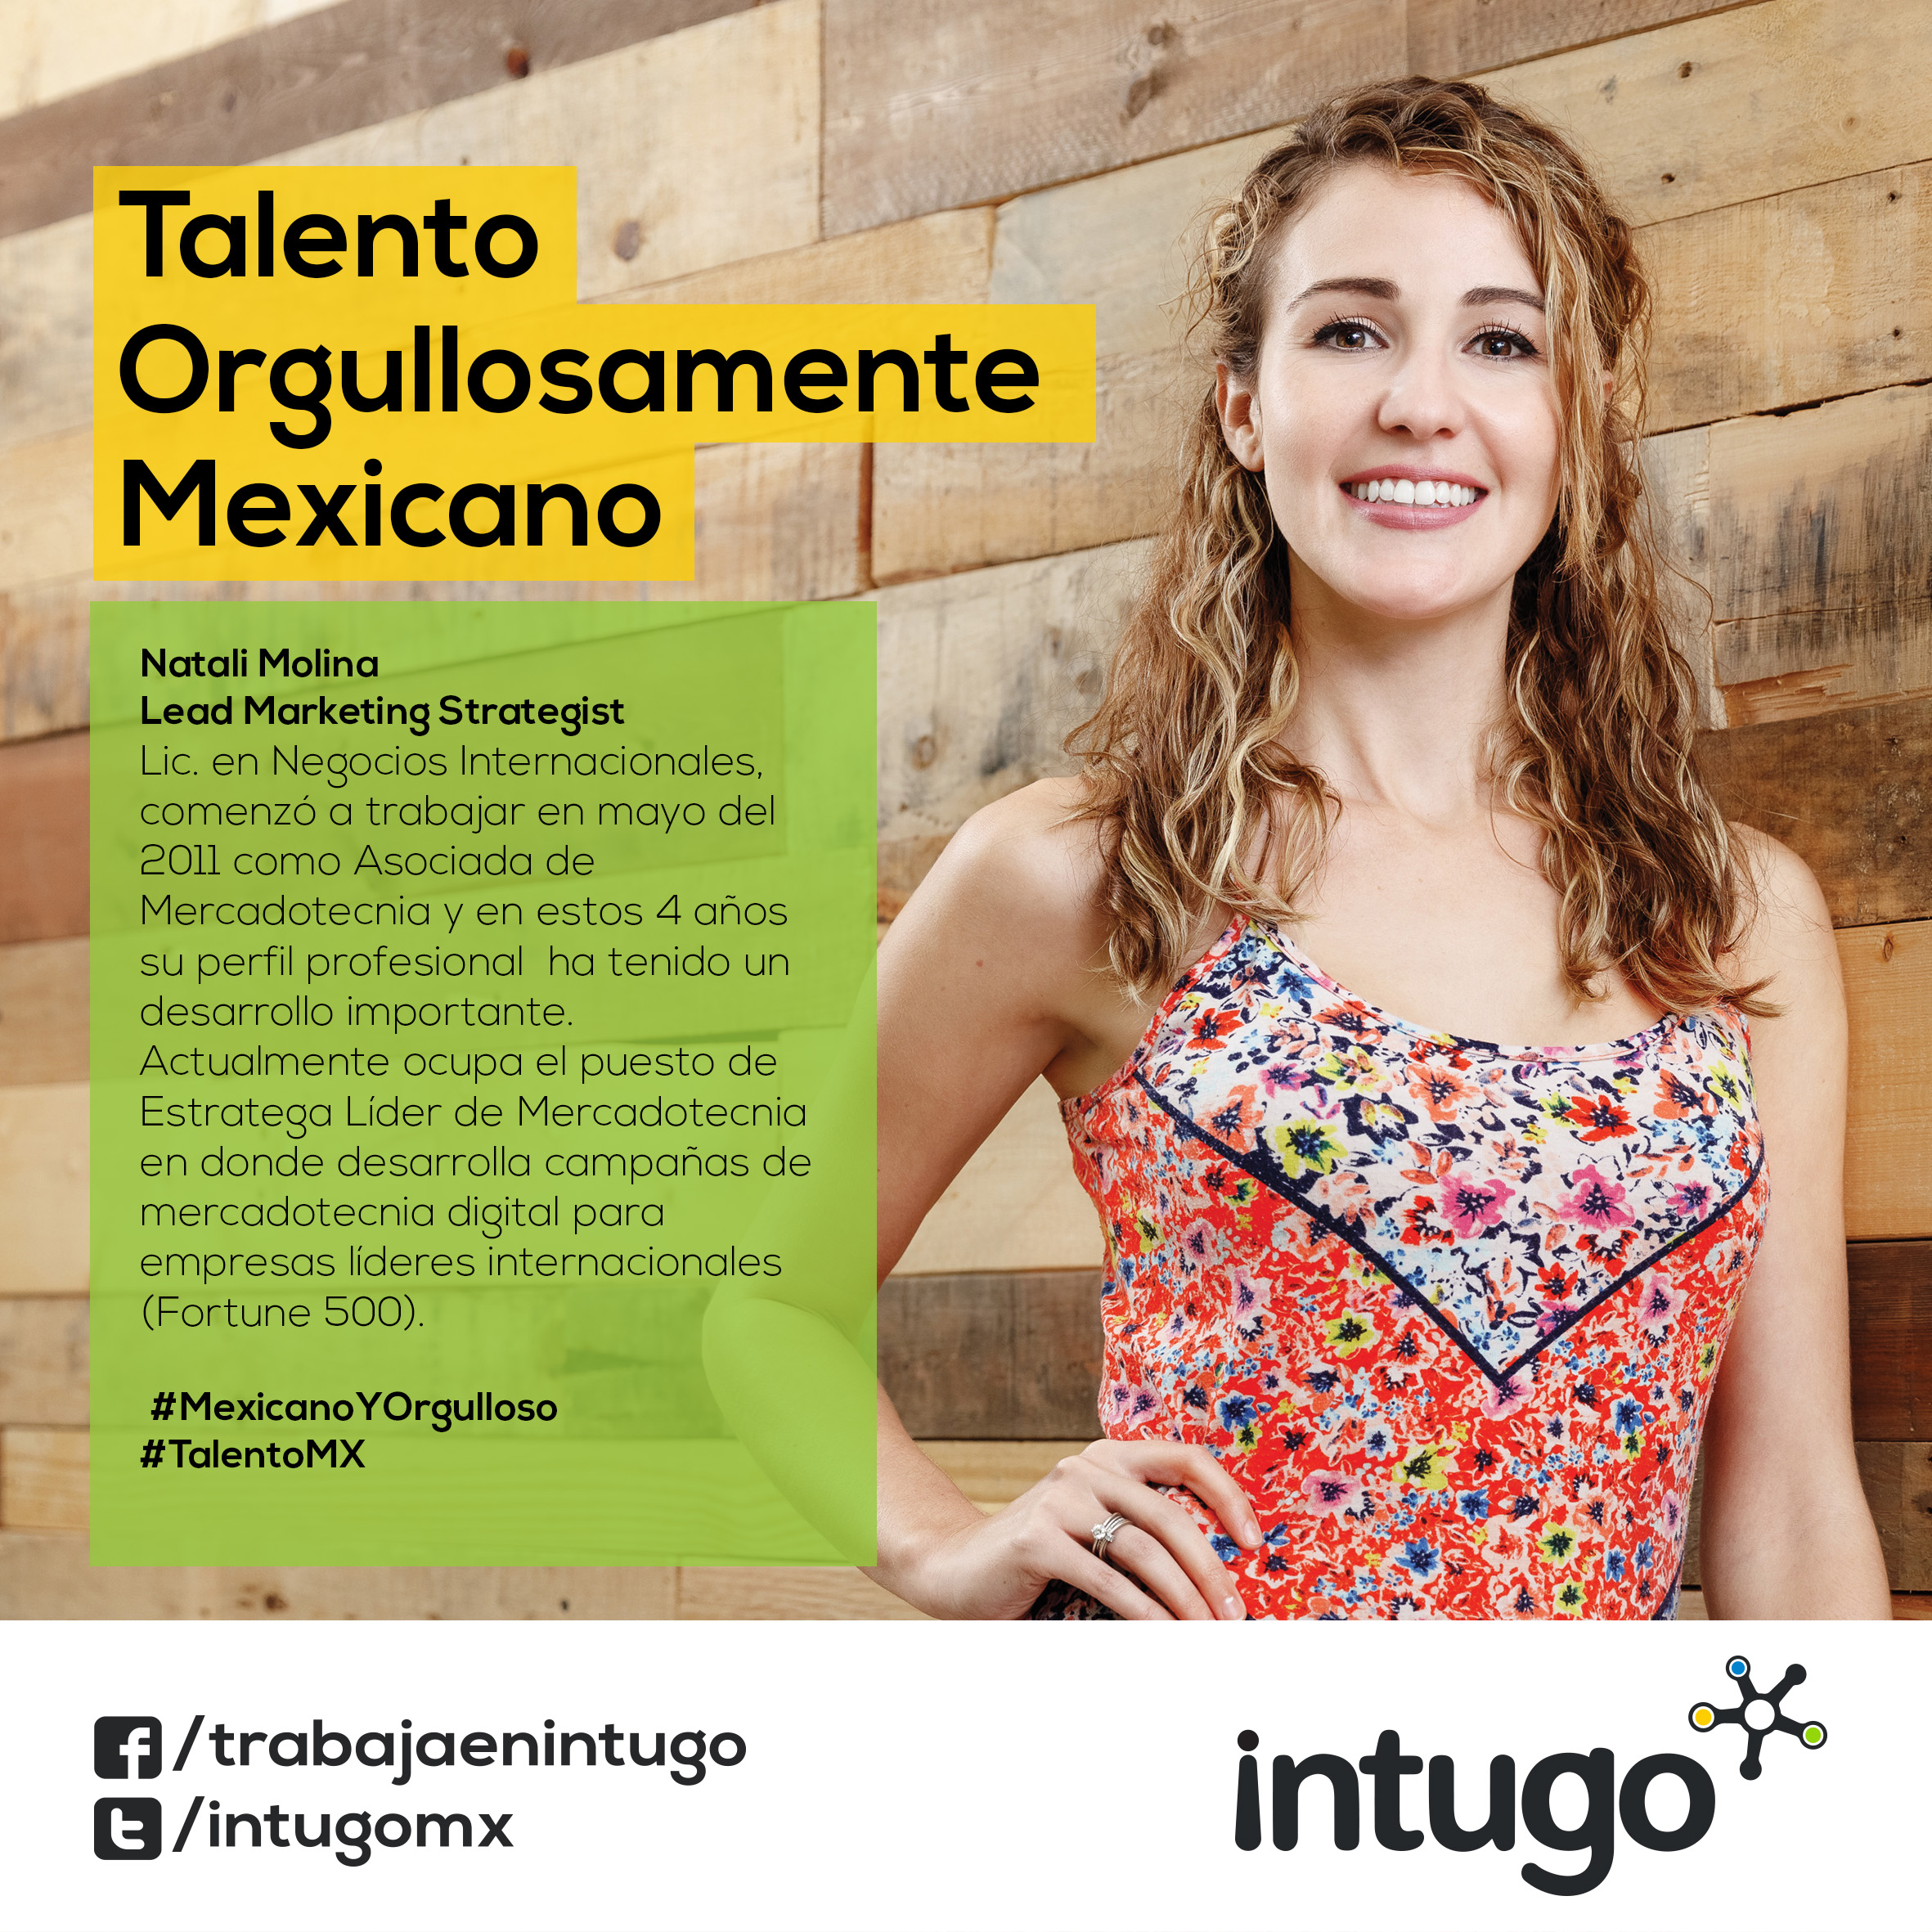 Marketing Strategist Intugo